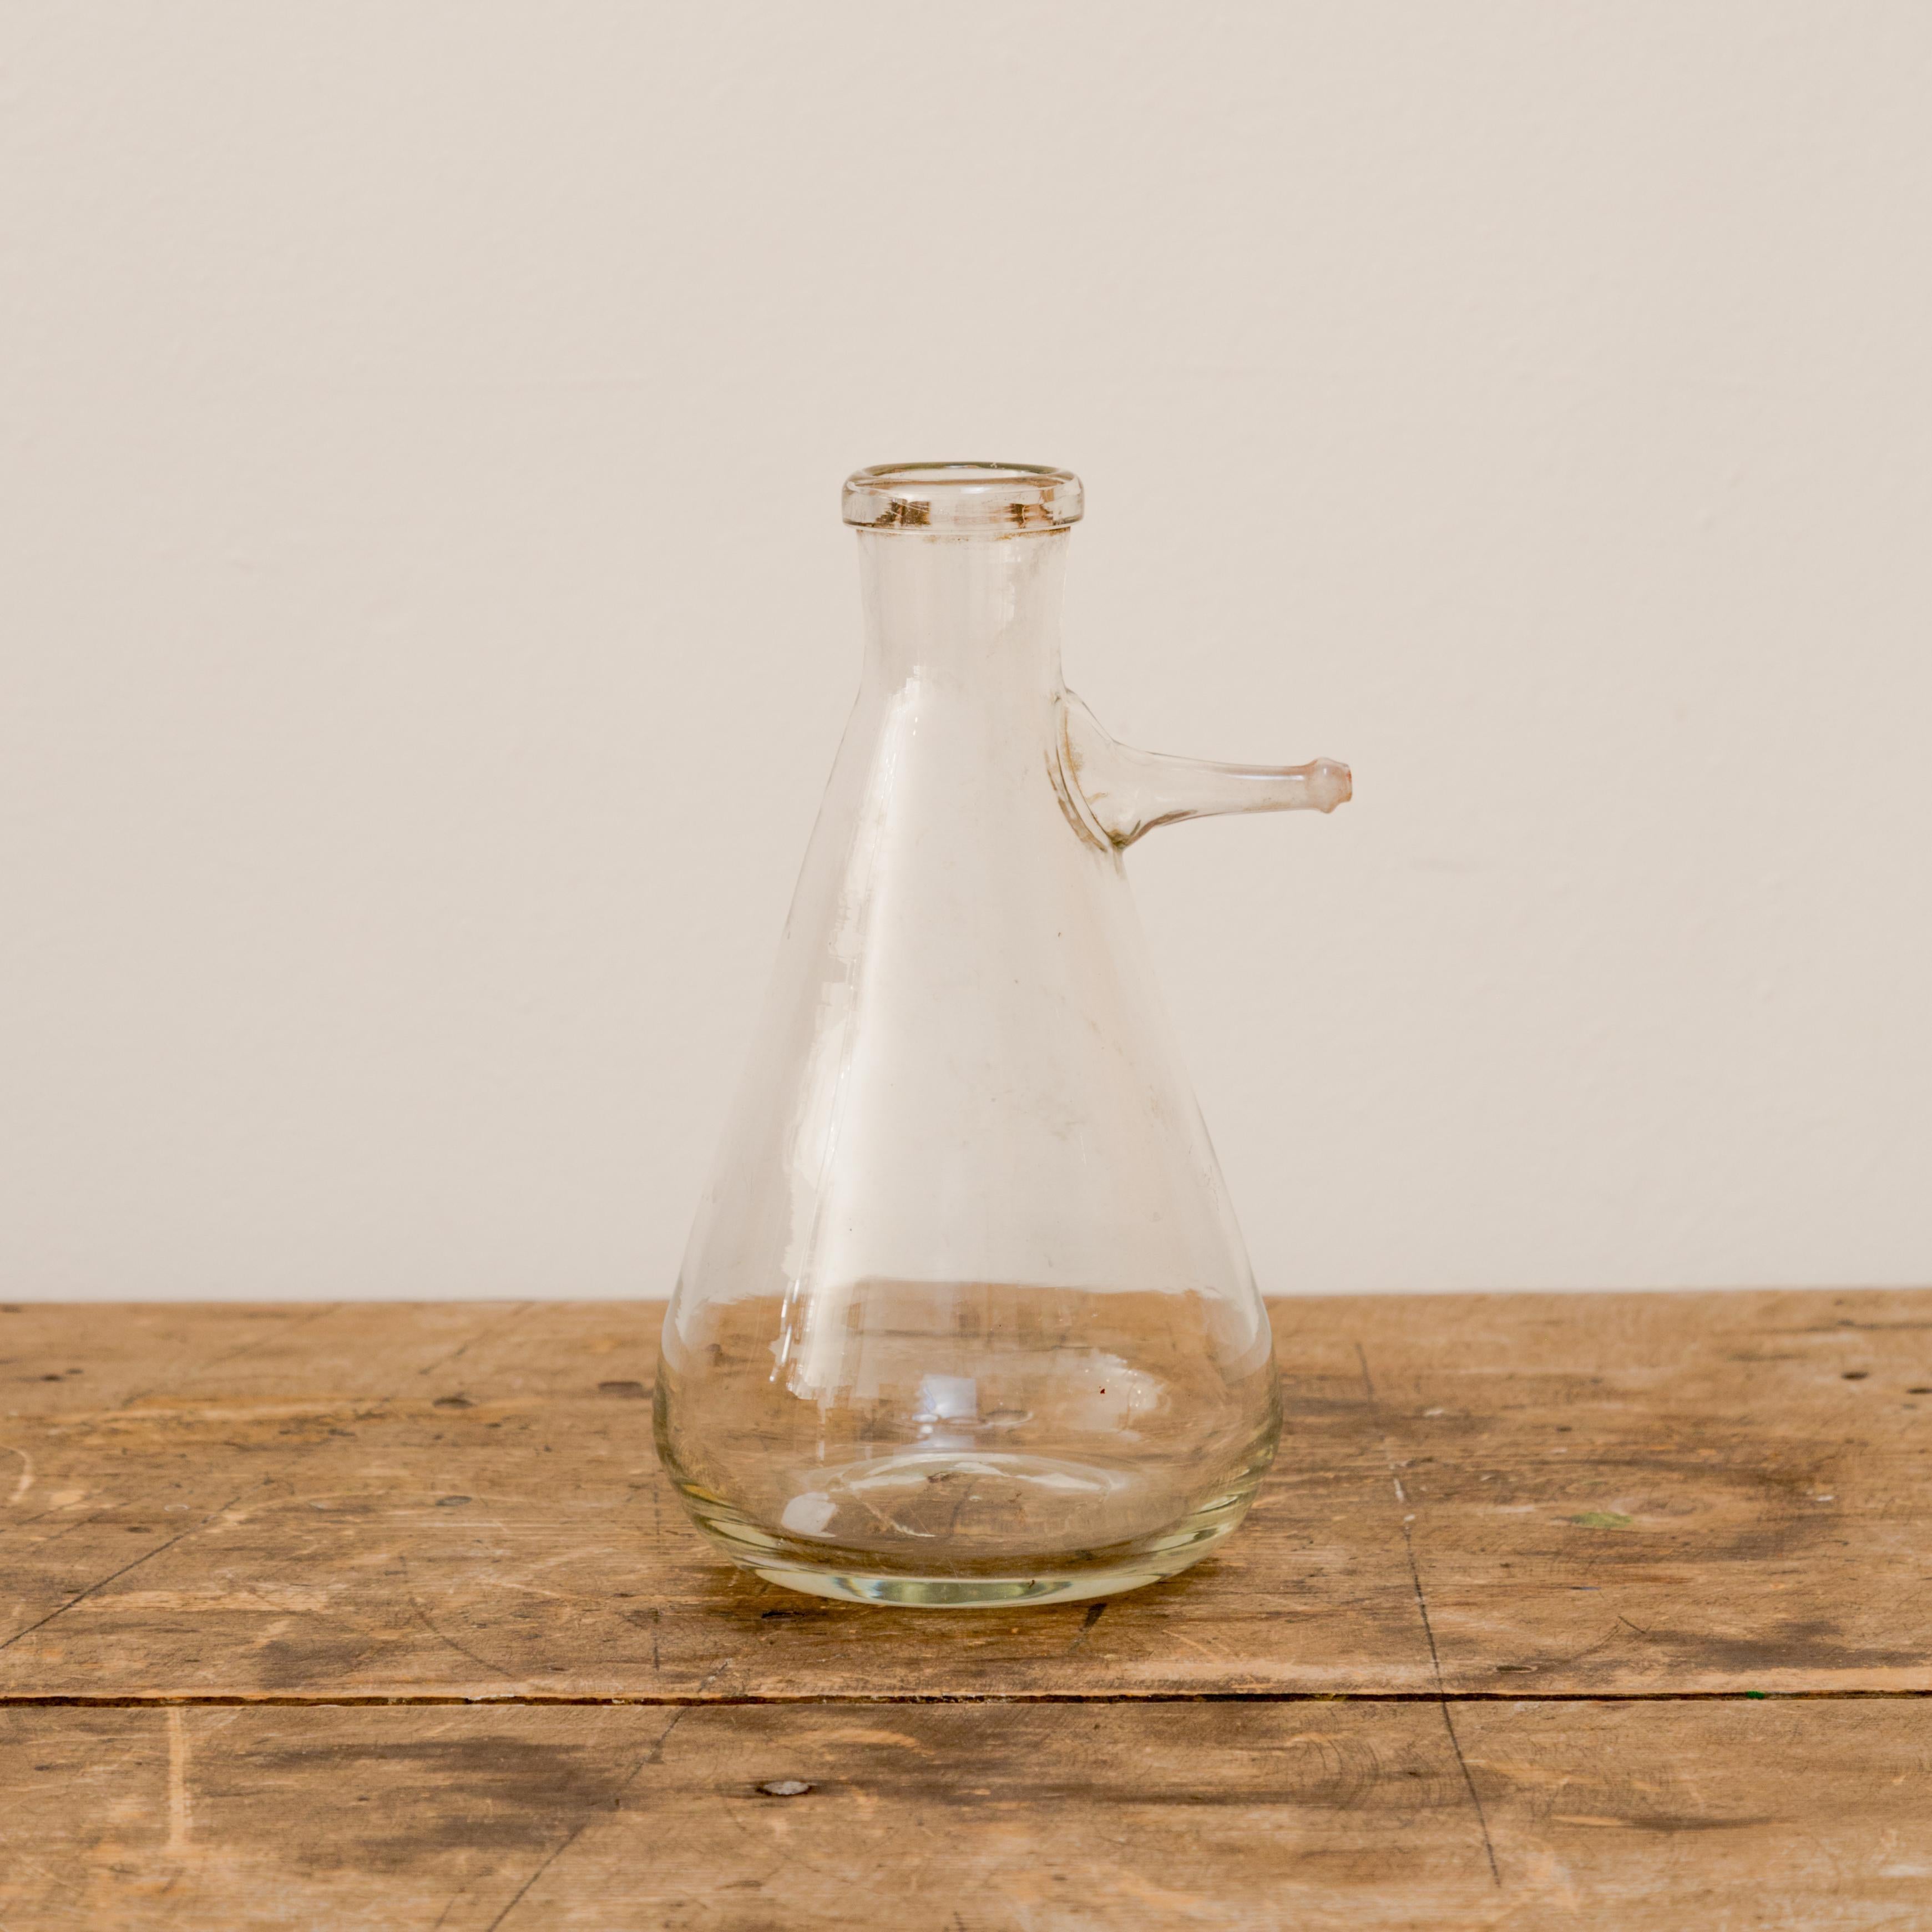 Beaker shaped vintage lab glass mini beaker vessel with spout.